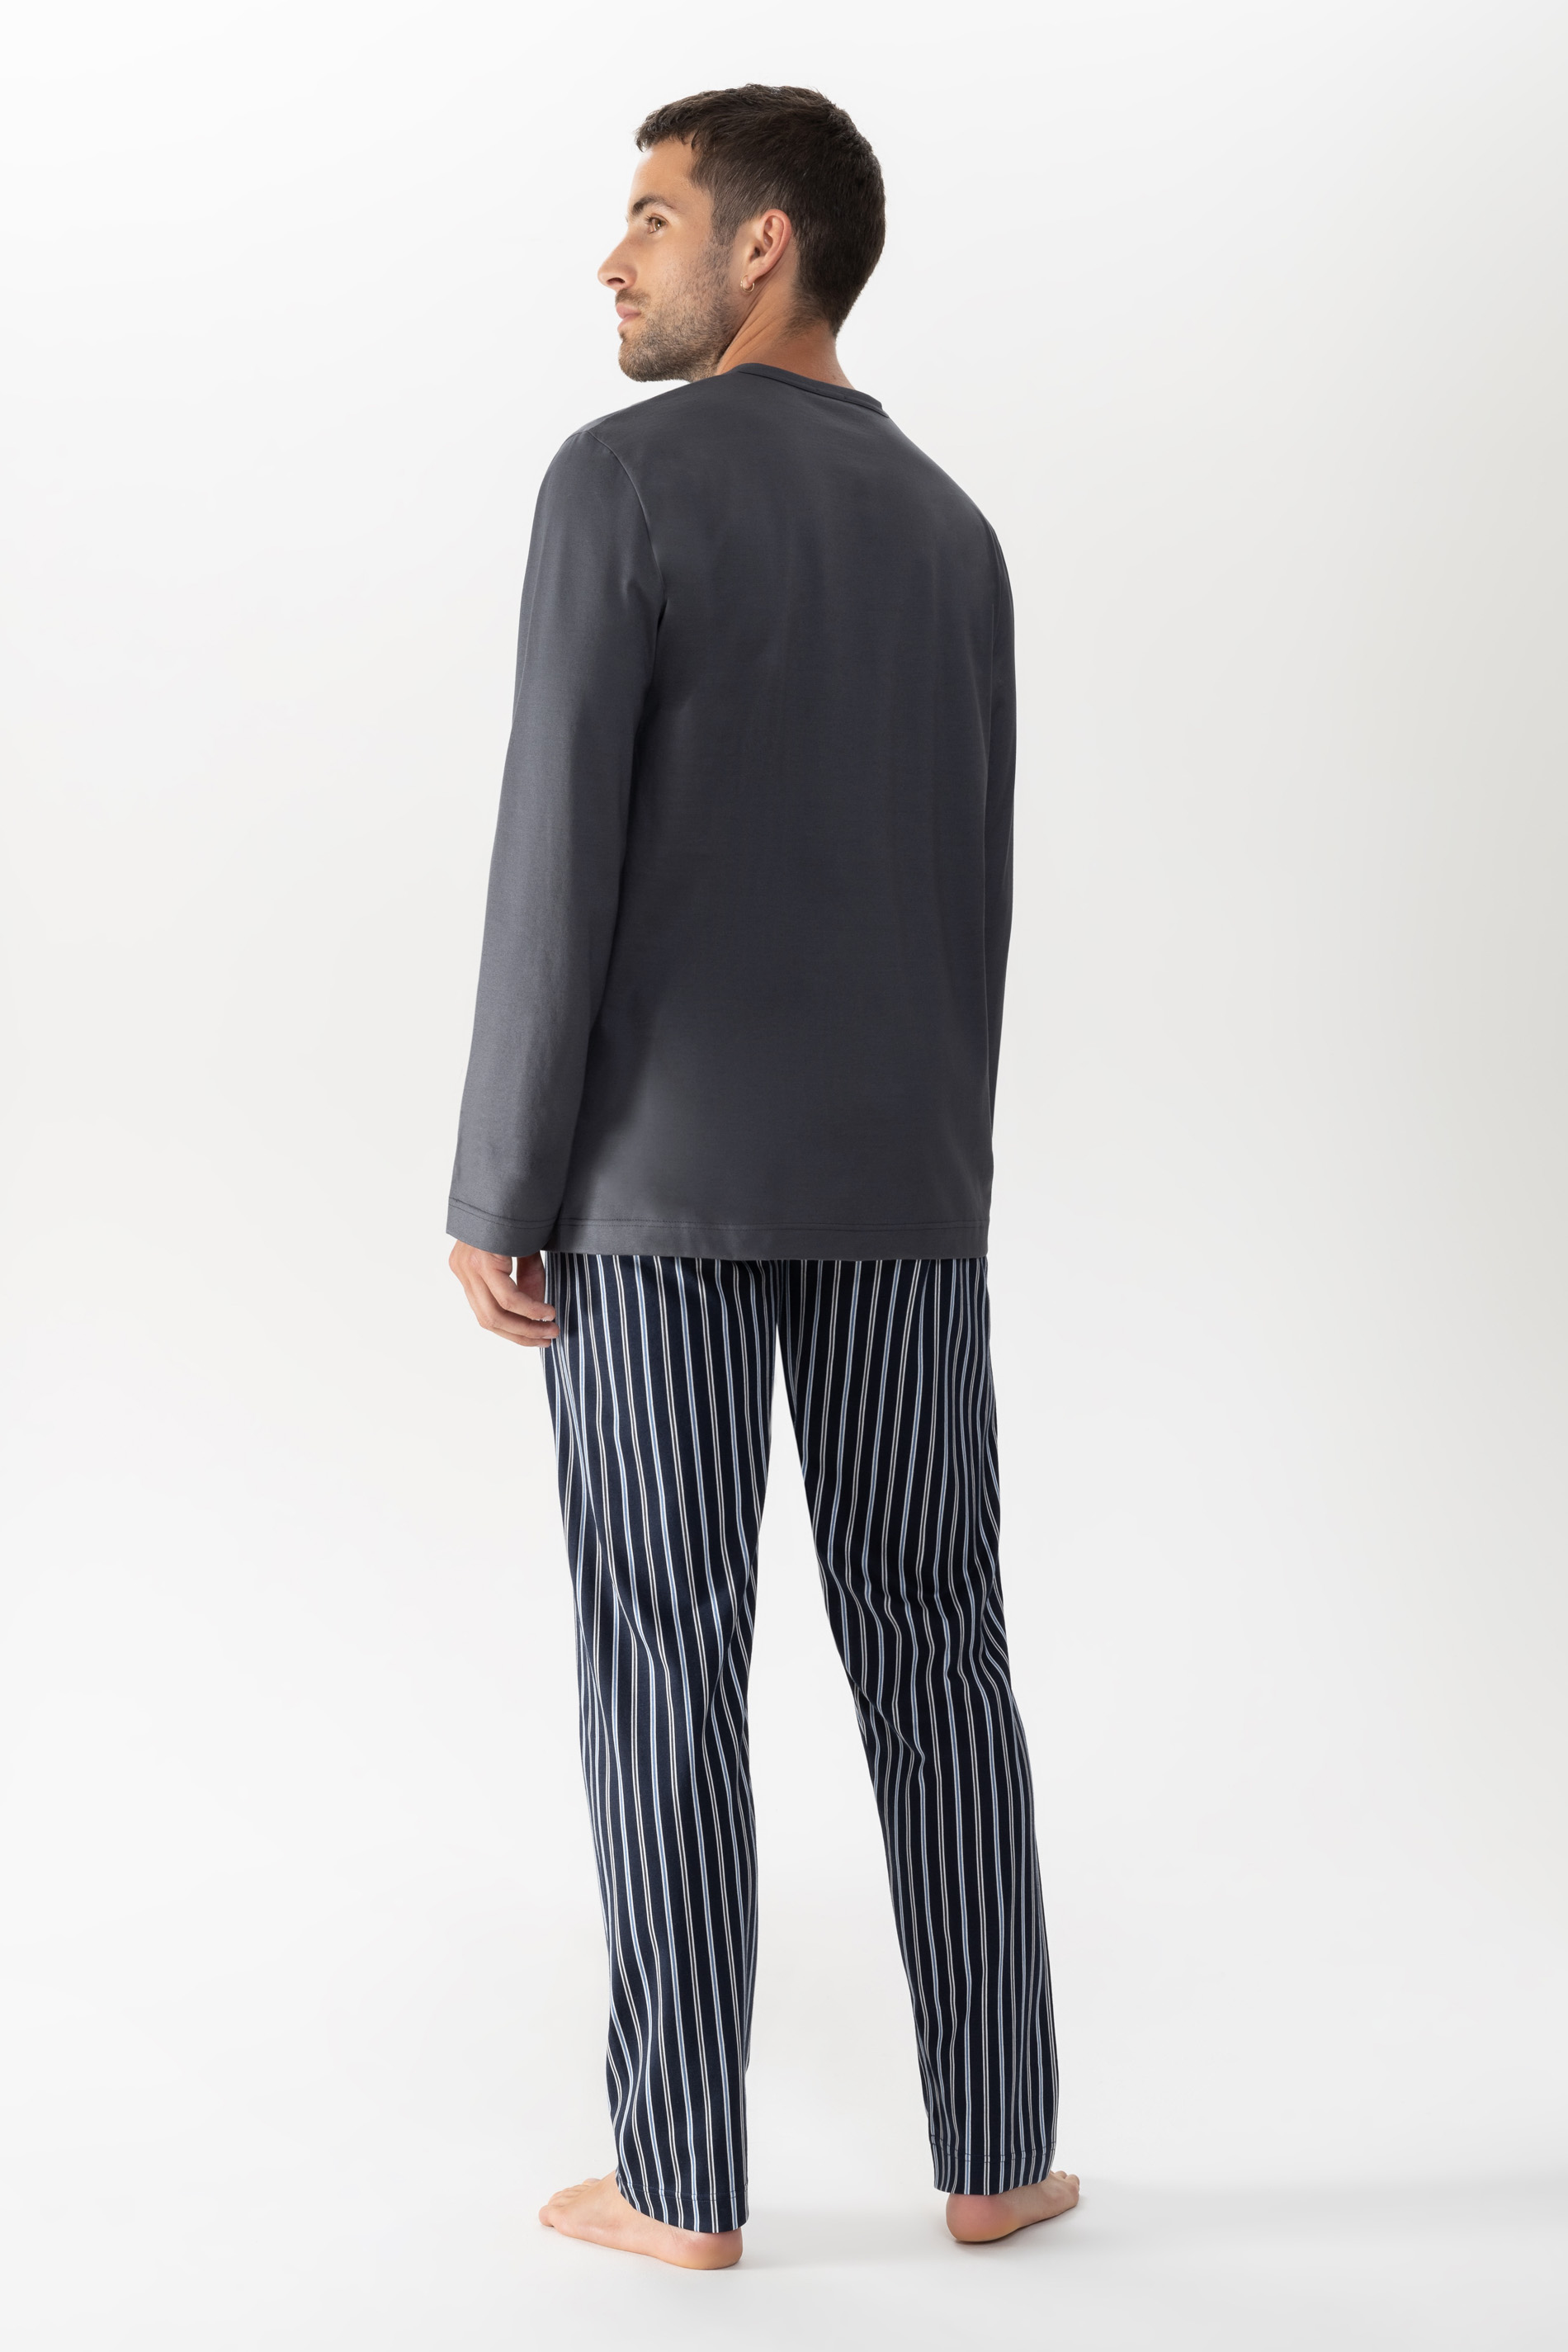 Pyjamas Soft Grey Serie Portimo Rear View | mey®